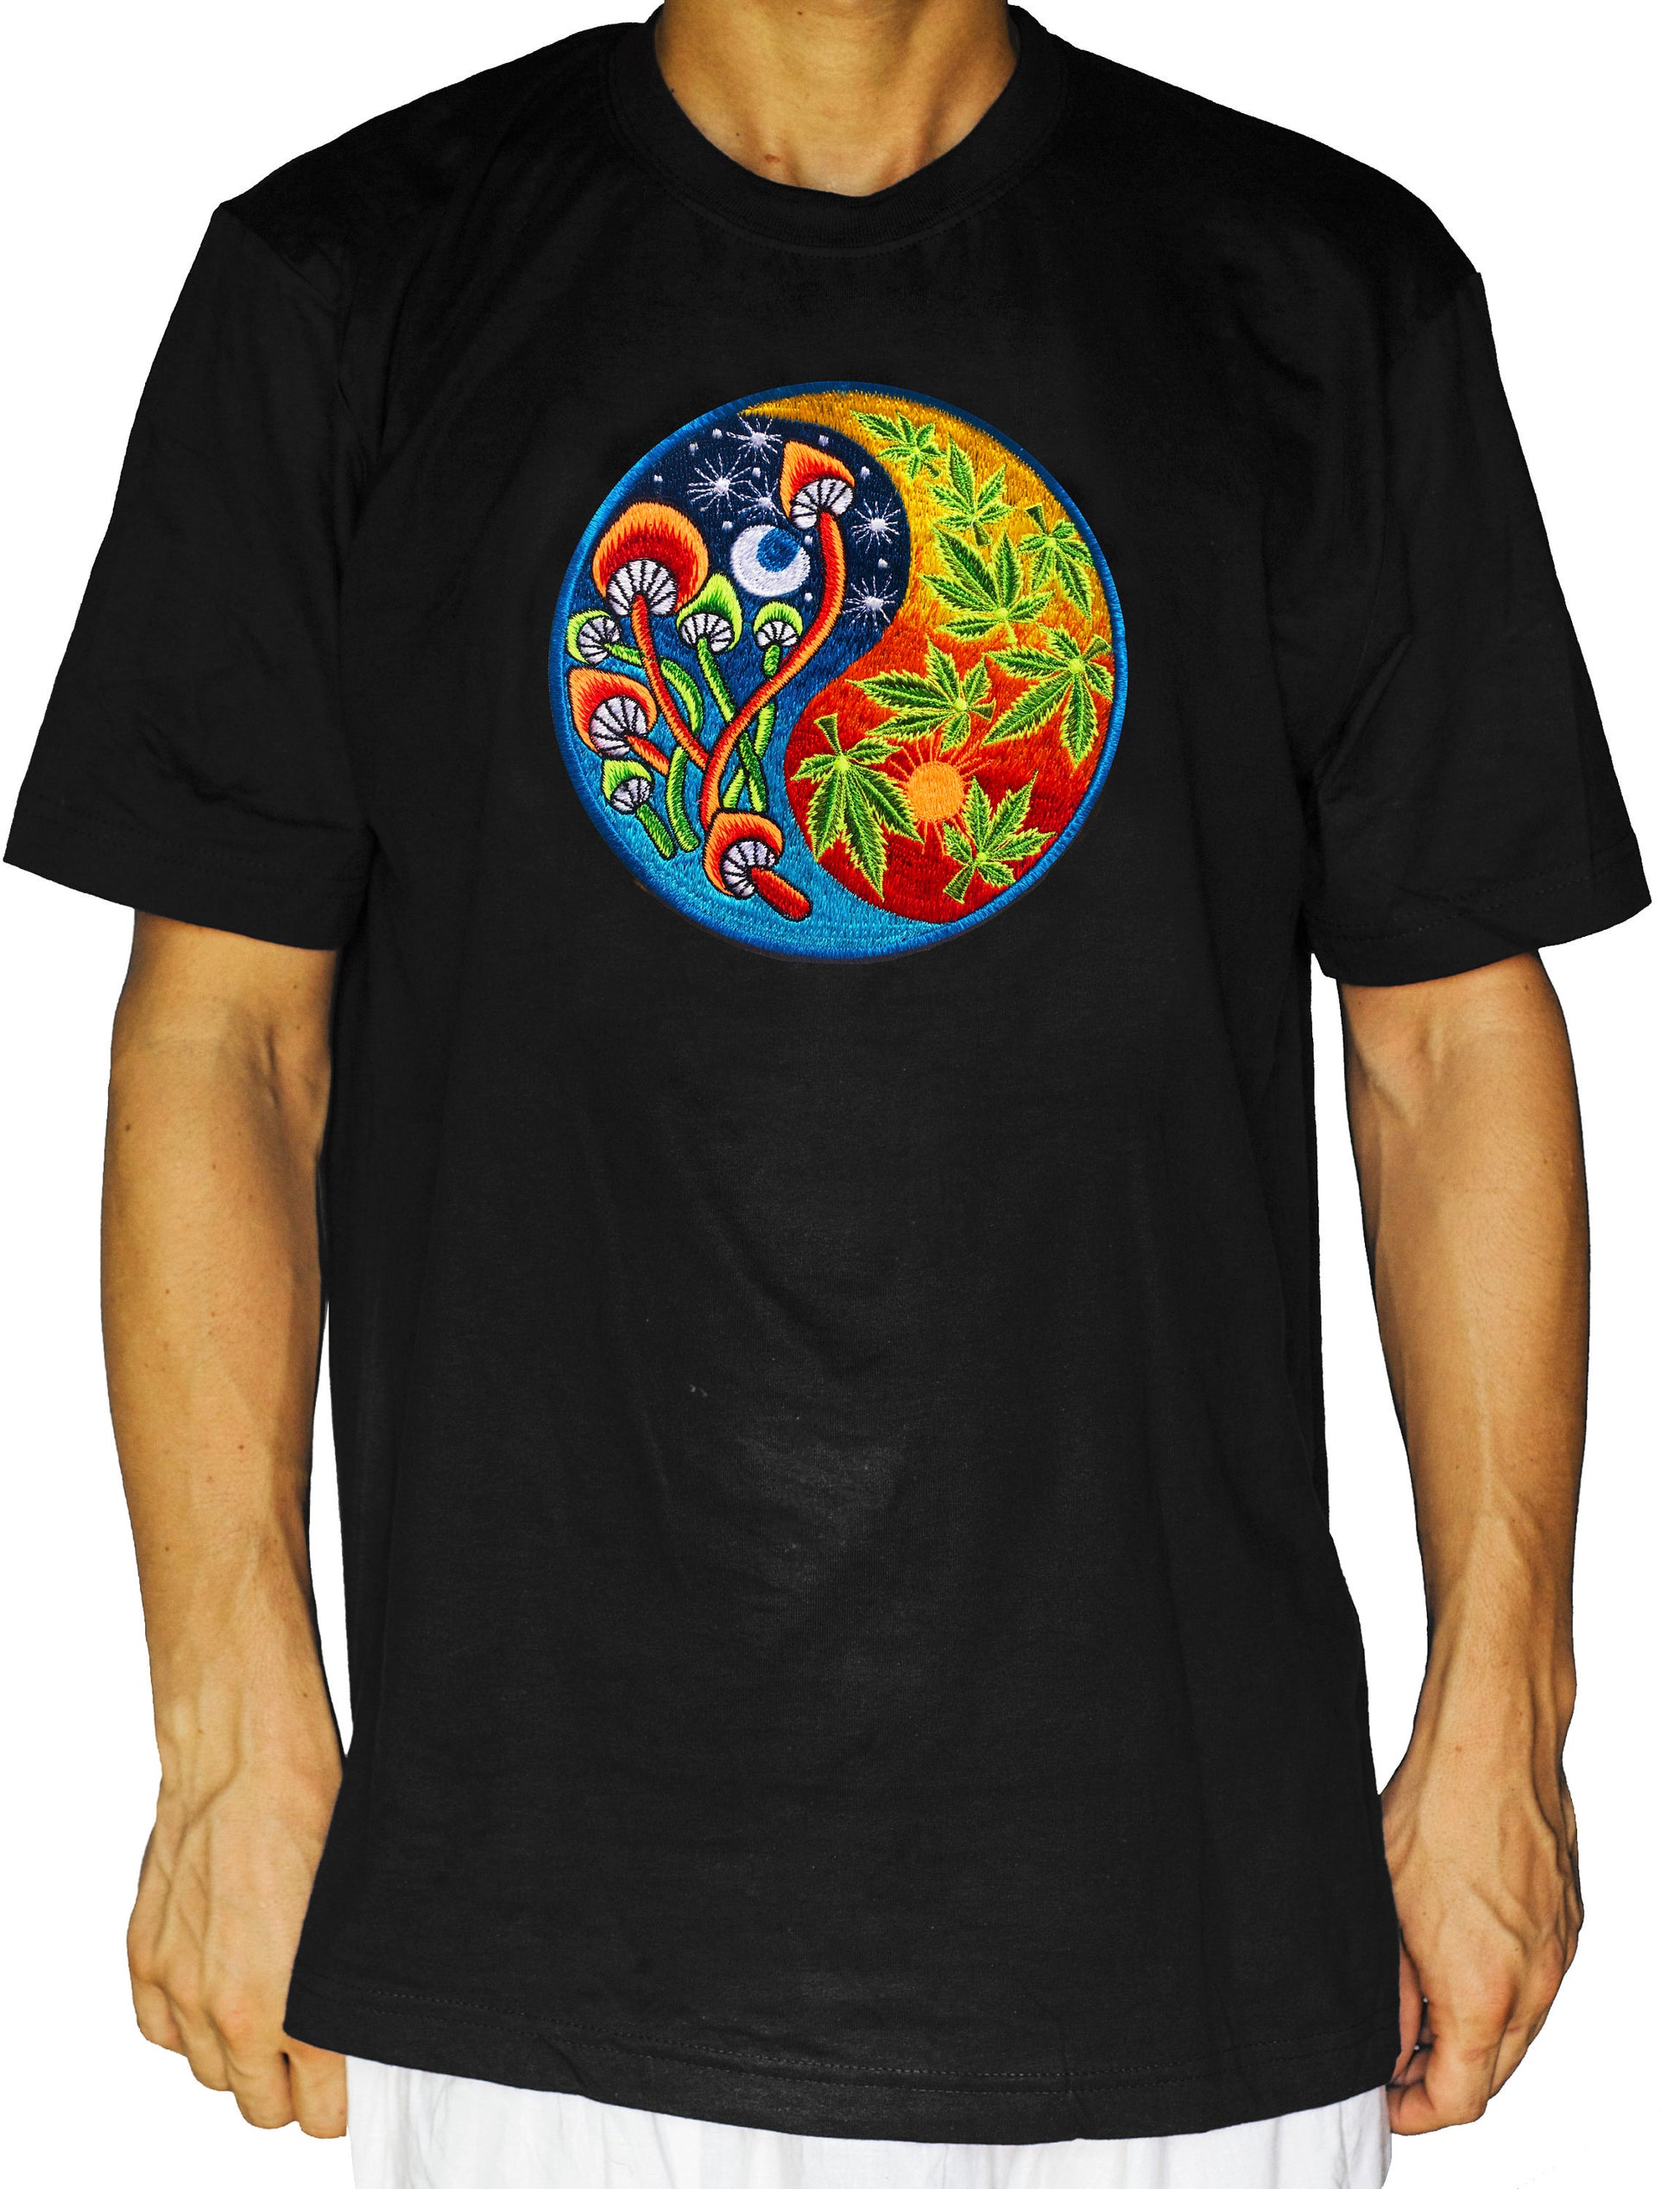 Psychedelic Ying Yang T-Shirt Cannabis weed magic mushroom Mandala yantra goa tshirt psy trance THC sun psilocybin moon shirt